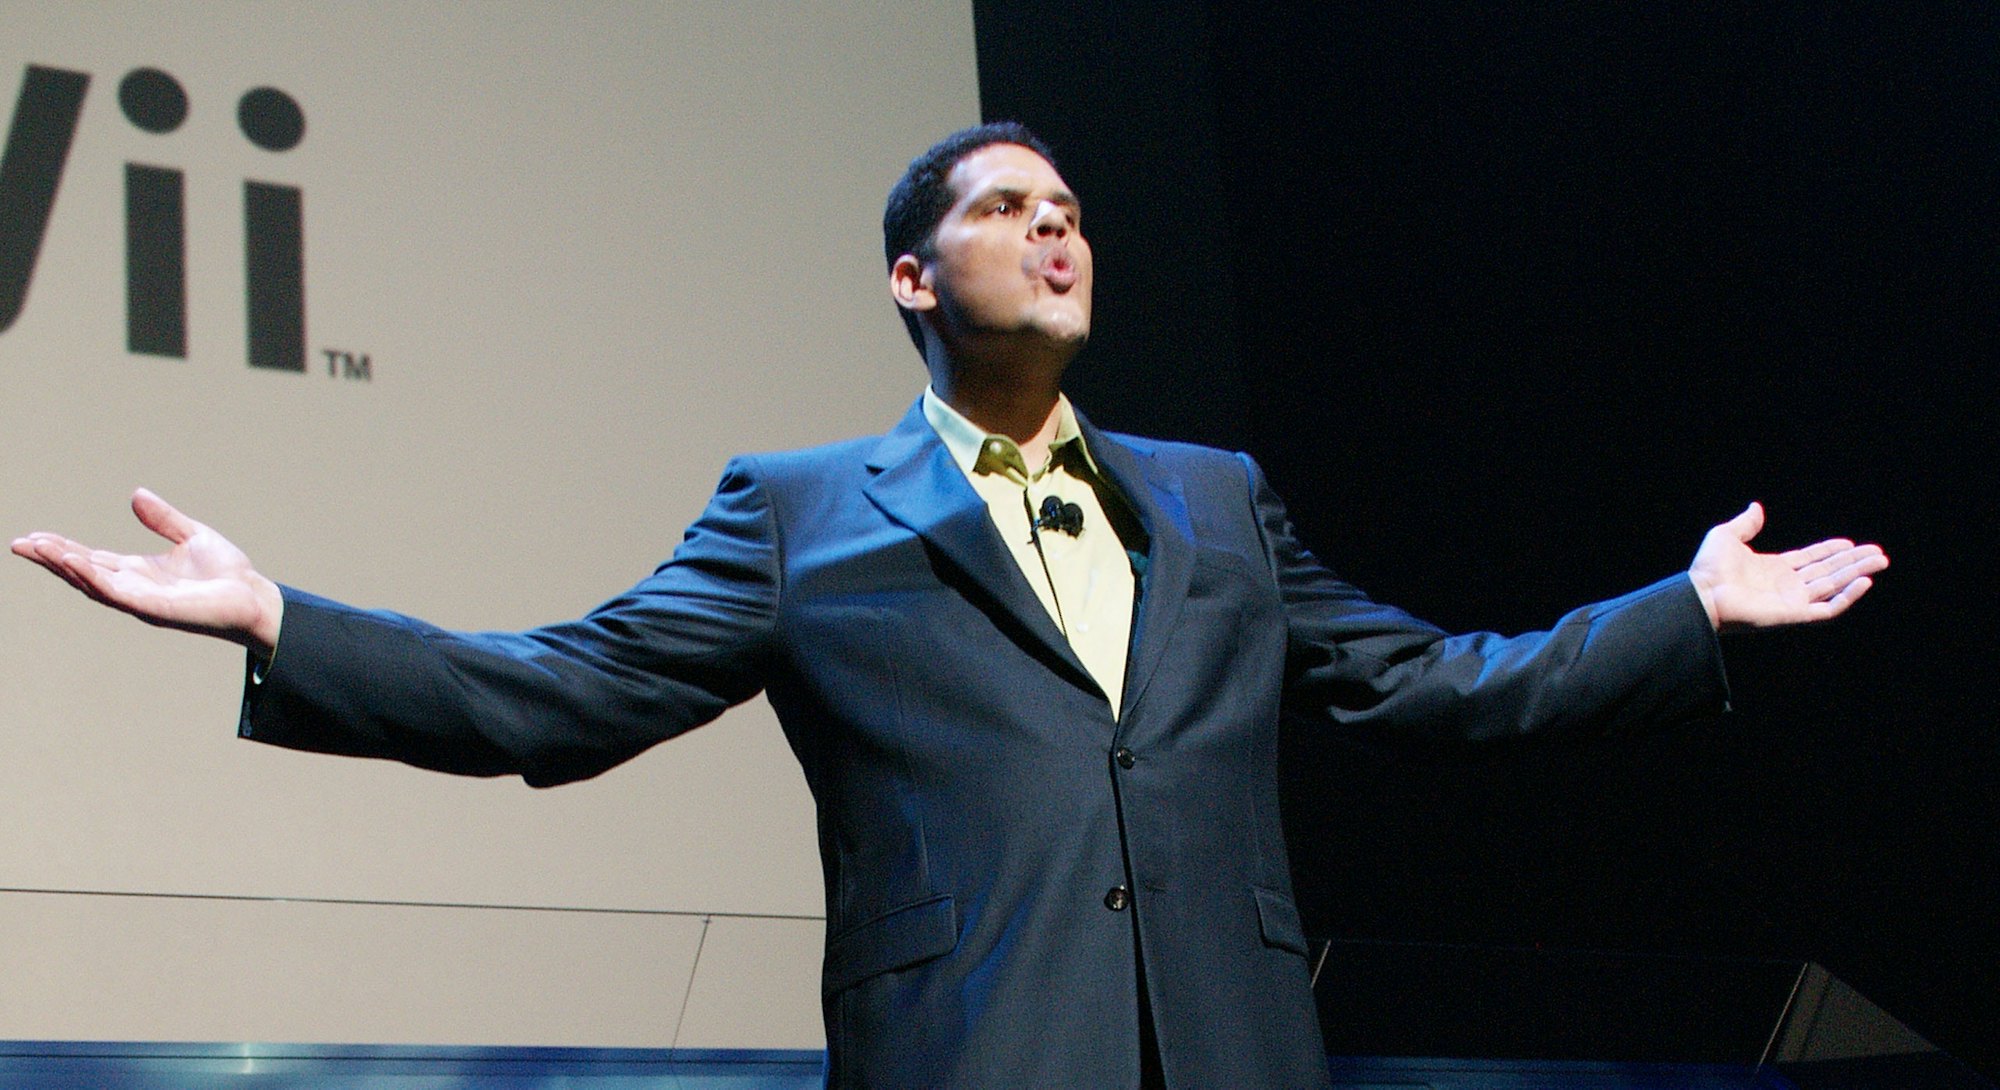 Reggie Fils-Aimé takes the stage at Nintendo's E3 showcase in 2006.